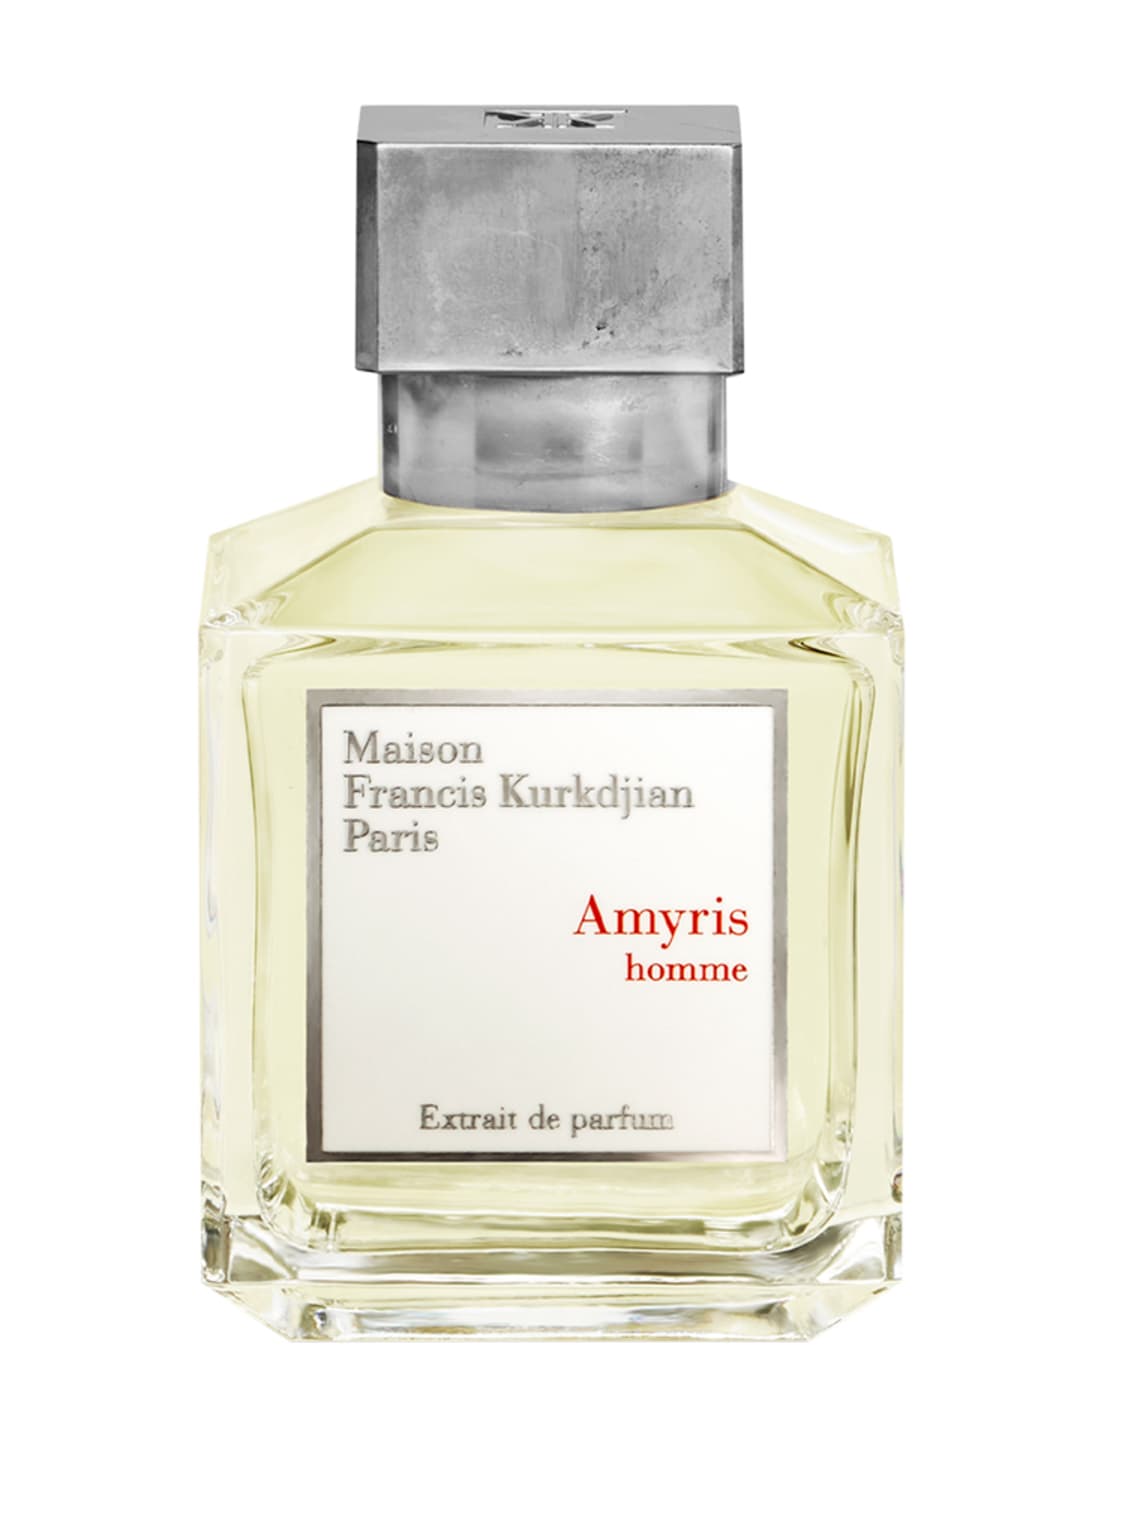 Maison Francis Kurkdjian Paris Amyris Homme Extrait de Parfum 70 ml von Maison Francis Kurkdjian Paris